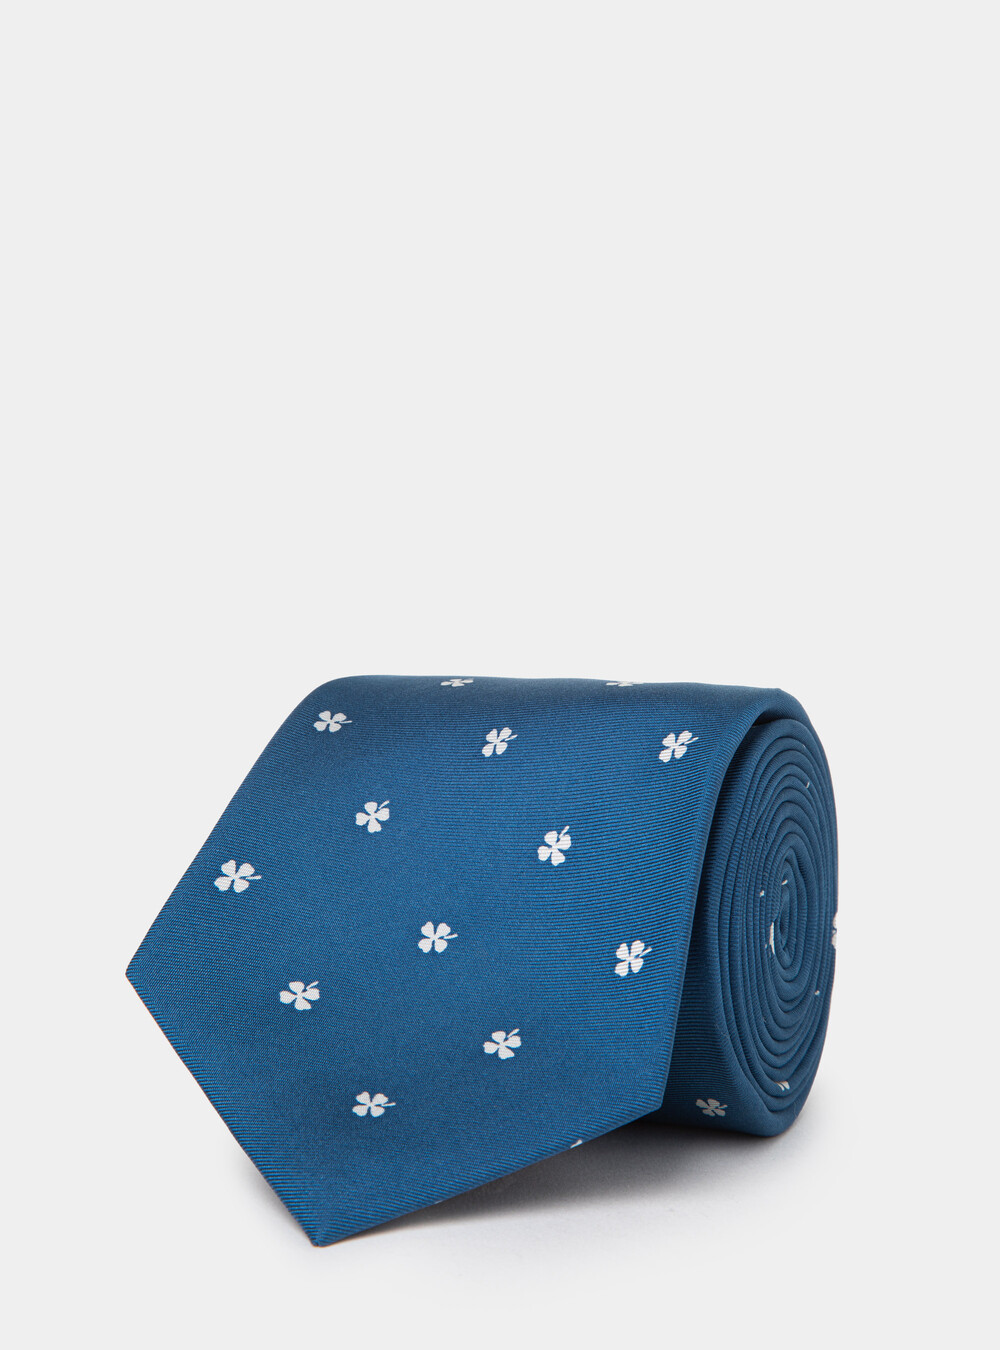 Cravate en soie imprimée Cloverleaf | GutteridgeEU | Cravates Uomo